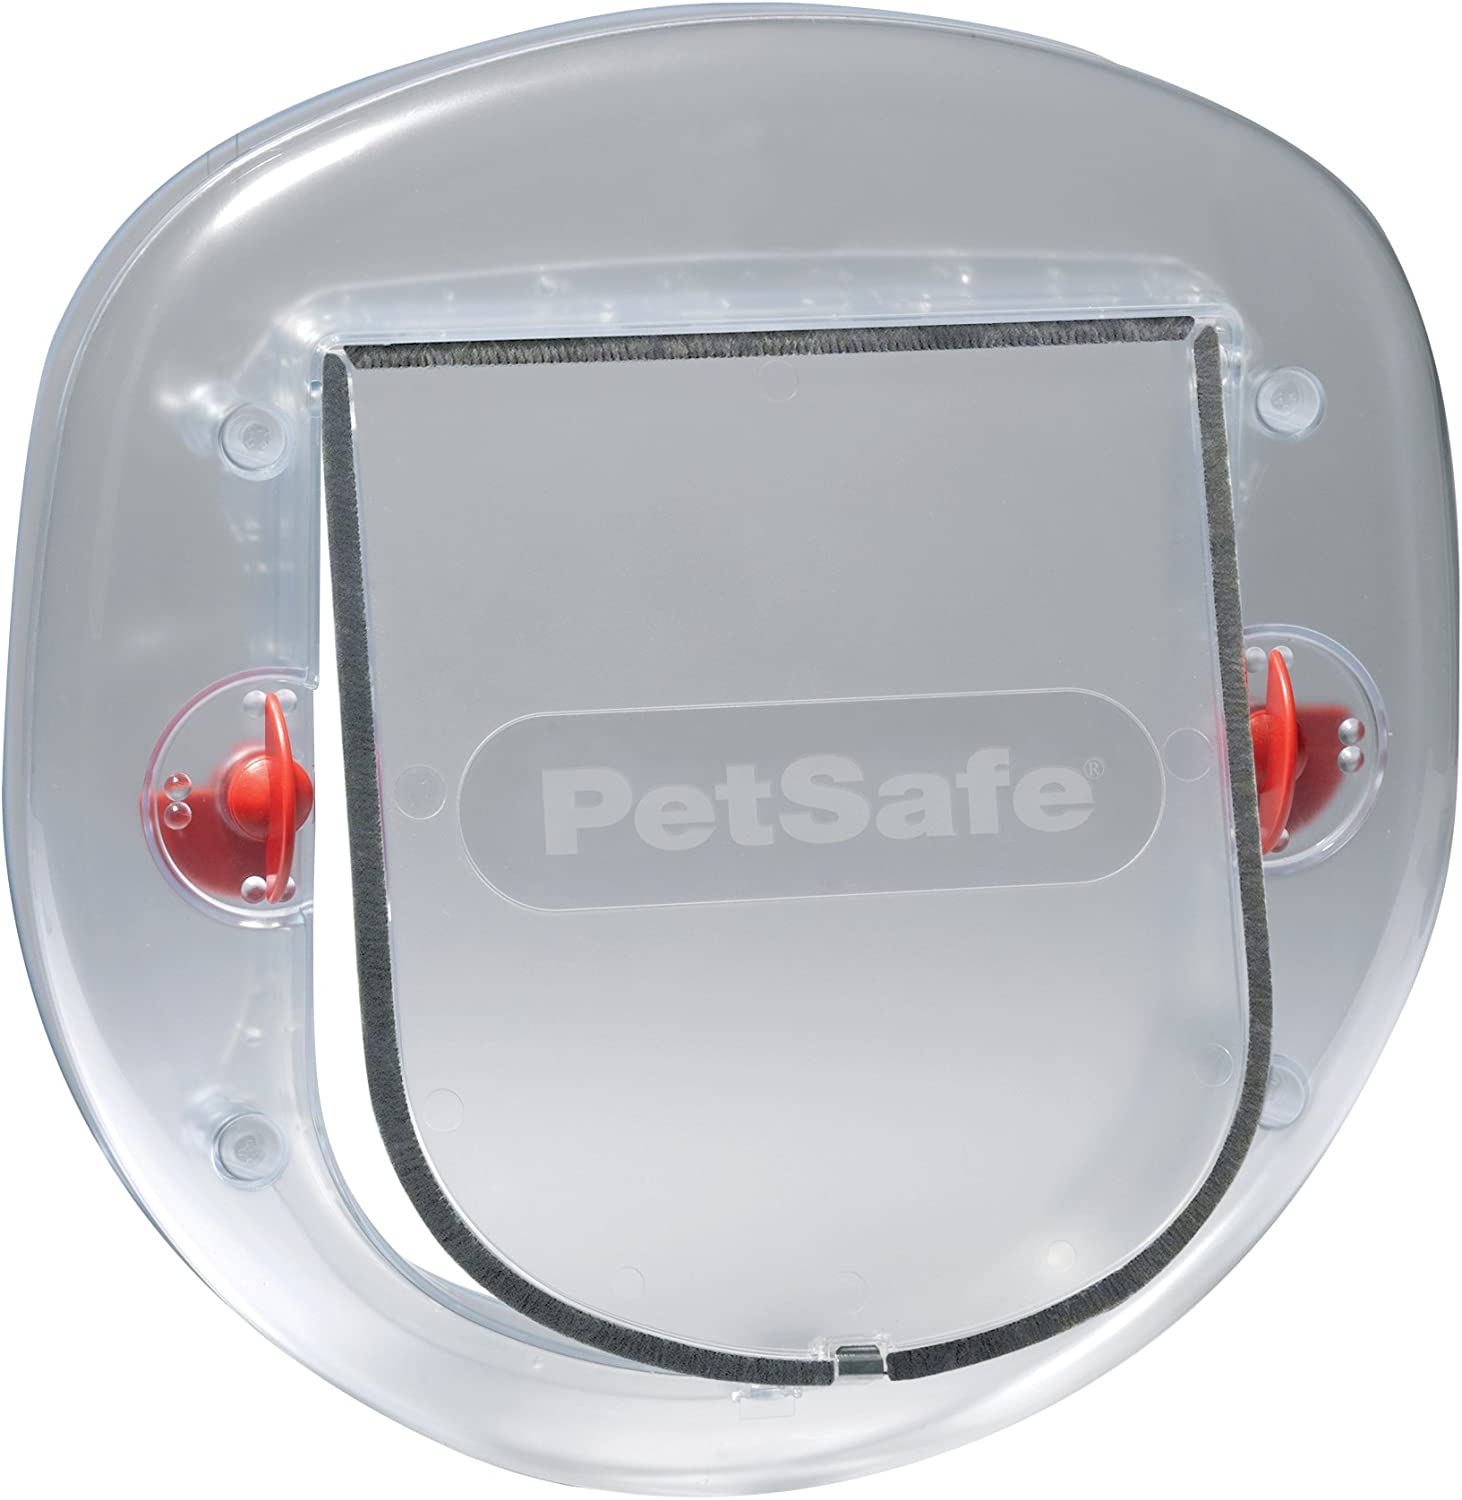 PetSafe Staywell درب و فلاپ حیوانات خانگی ، گربه بزرگ / سگ کوچک، مات، نصب آسان برای درهای شیشه ای کشویی 